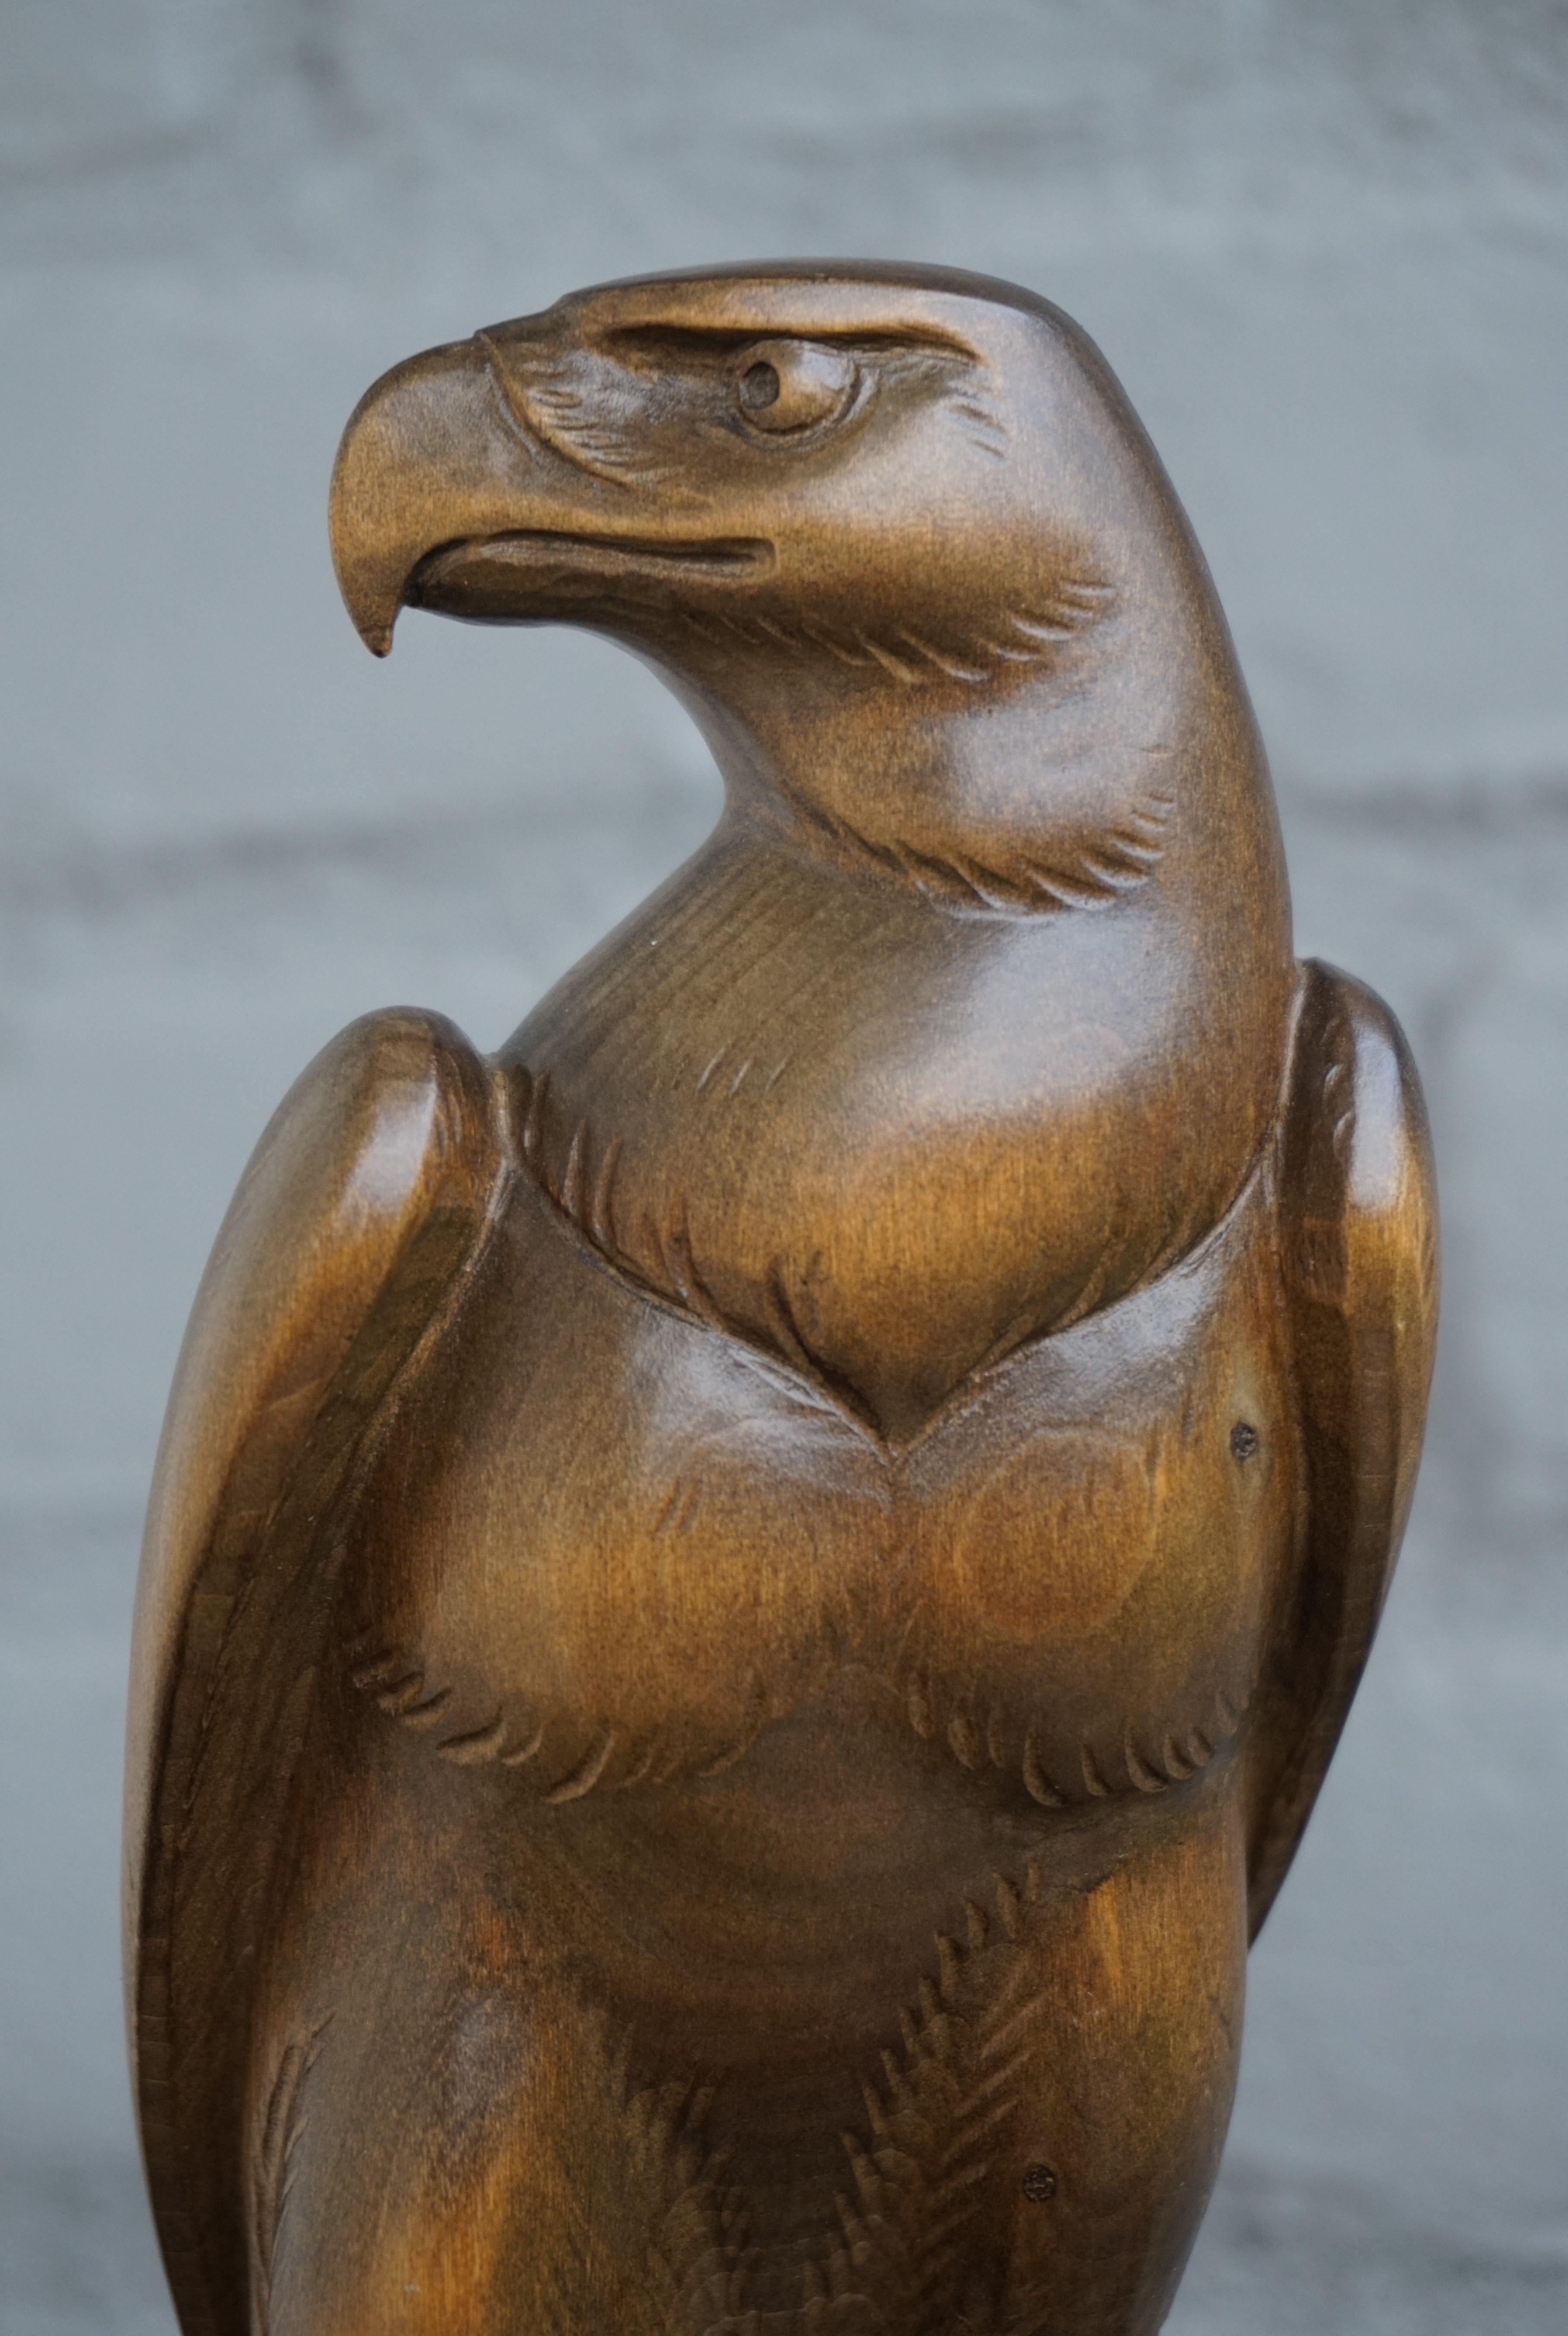 hand carved wooden eagle for sale